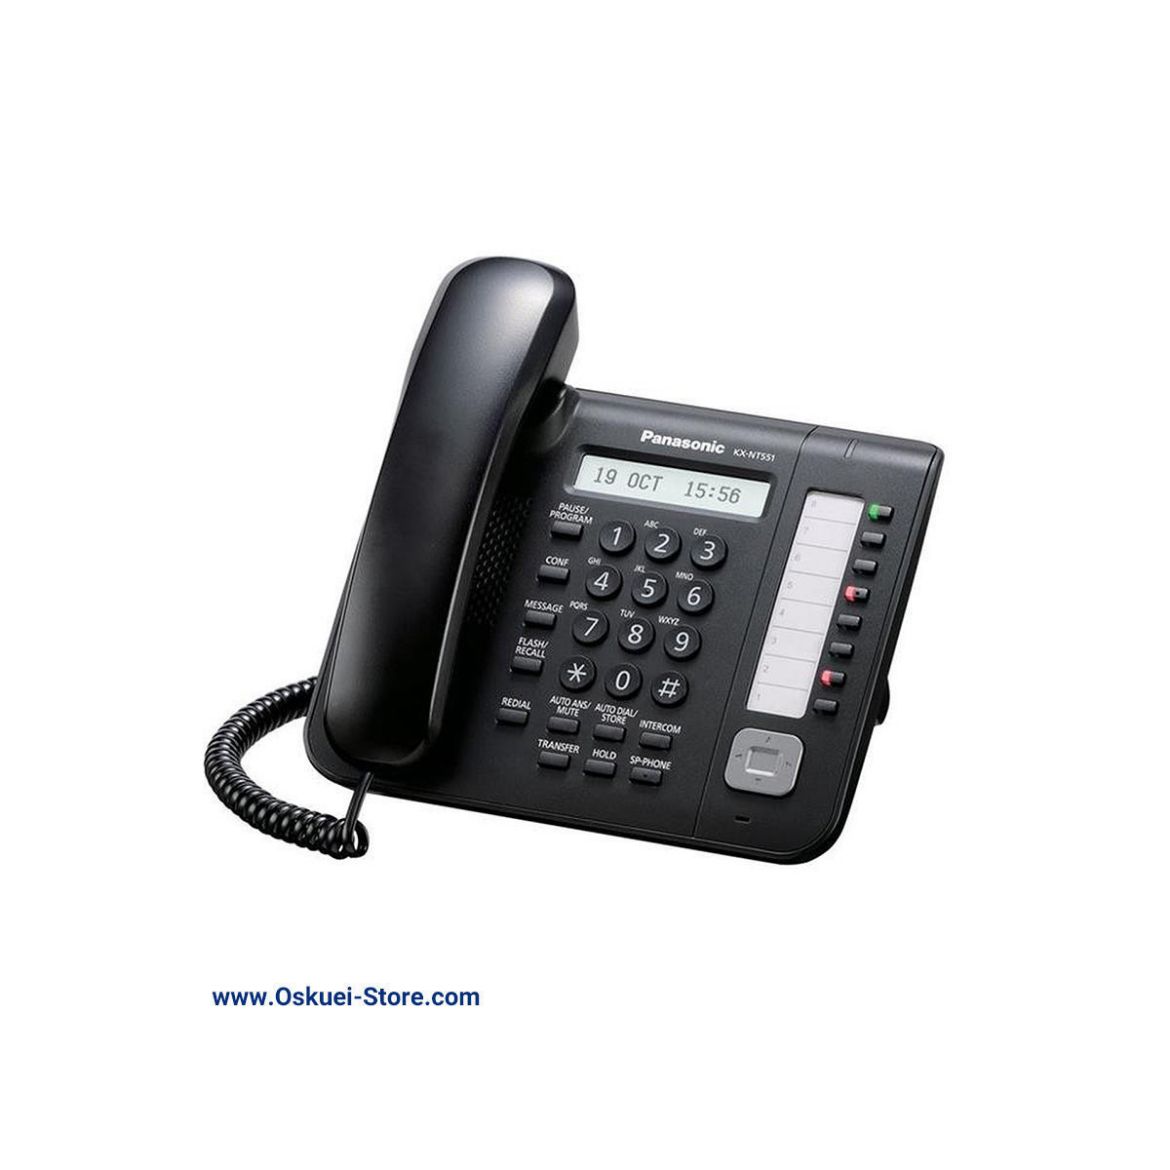 Panasonic KX-NT551 VoIP Telephone Black Right